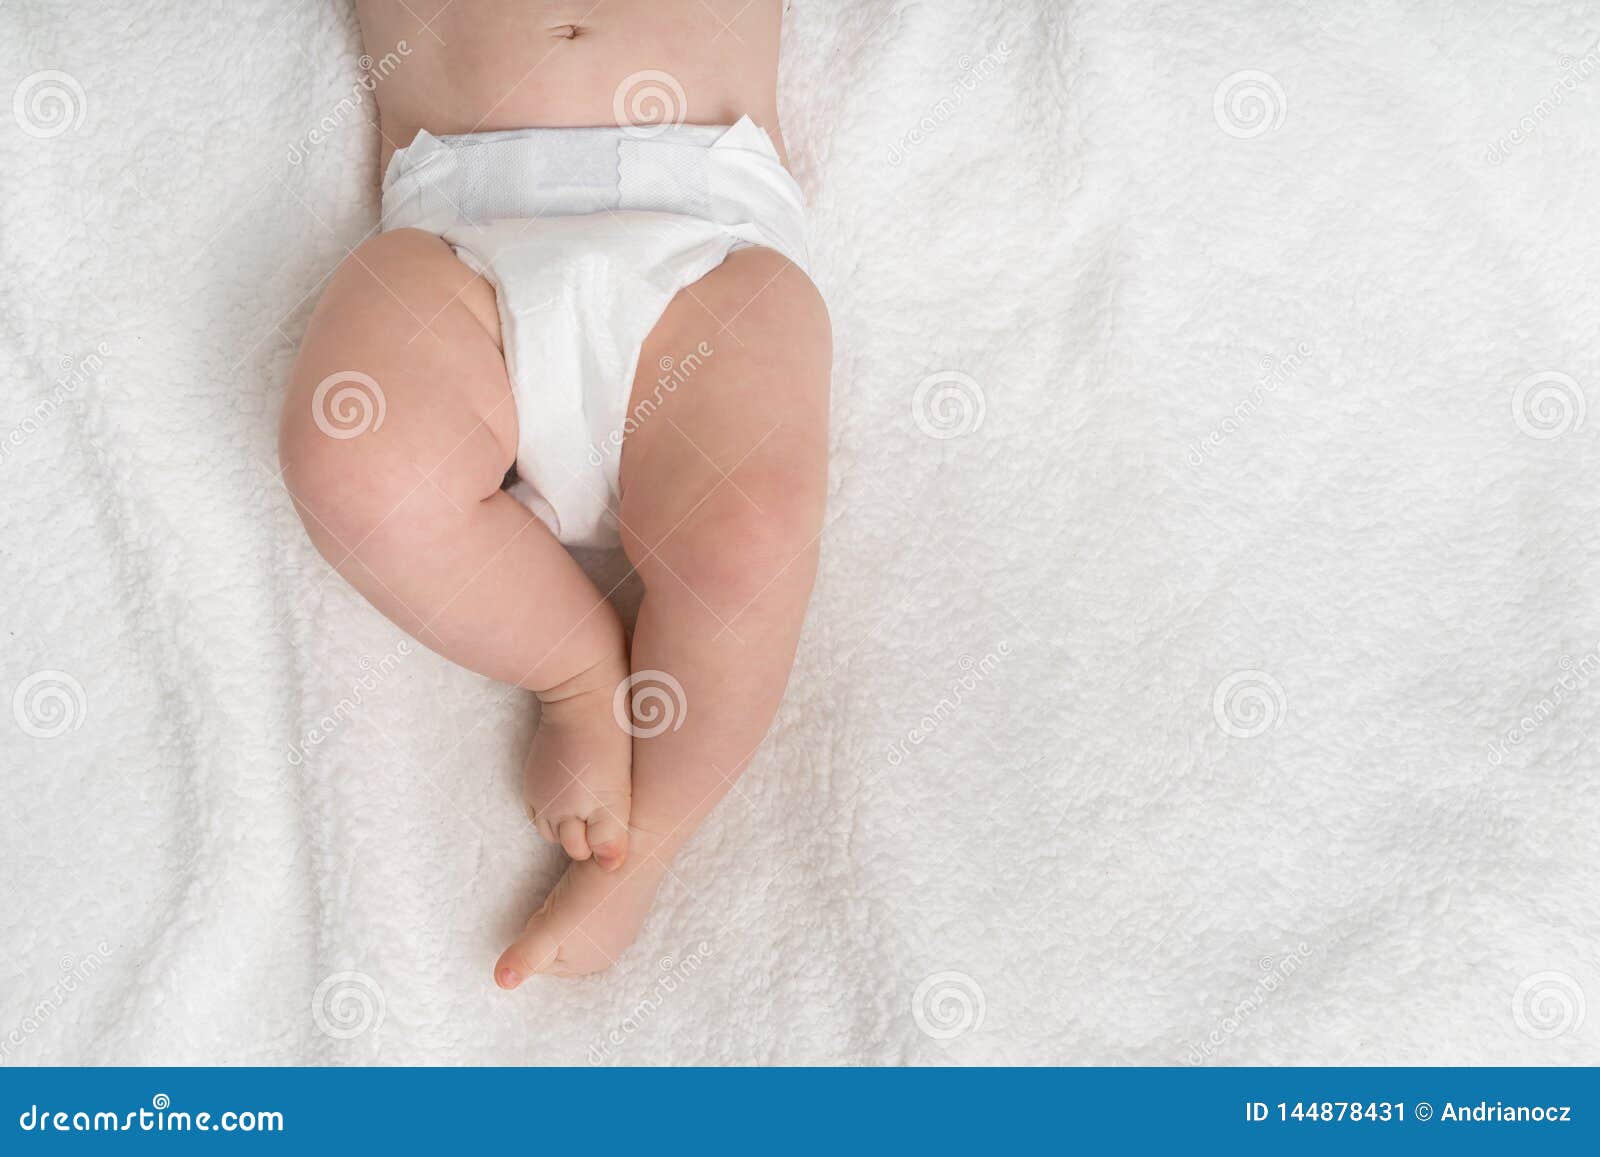 newborn baby in diaper lying on white blanket